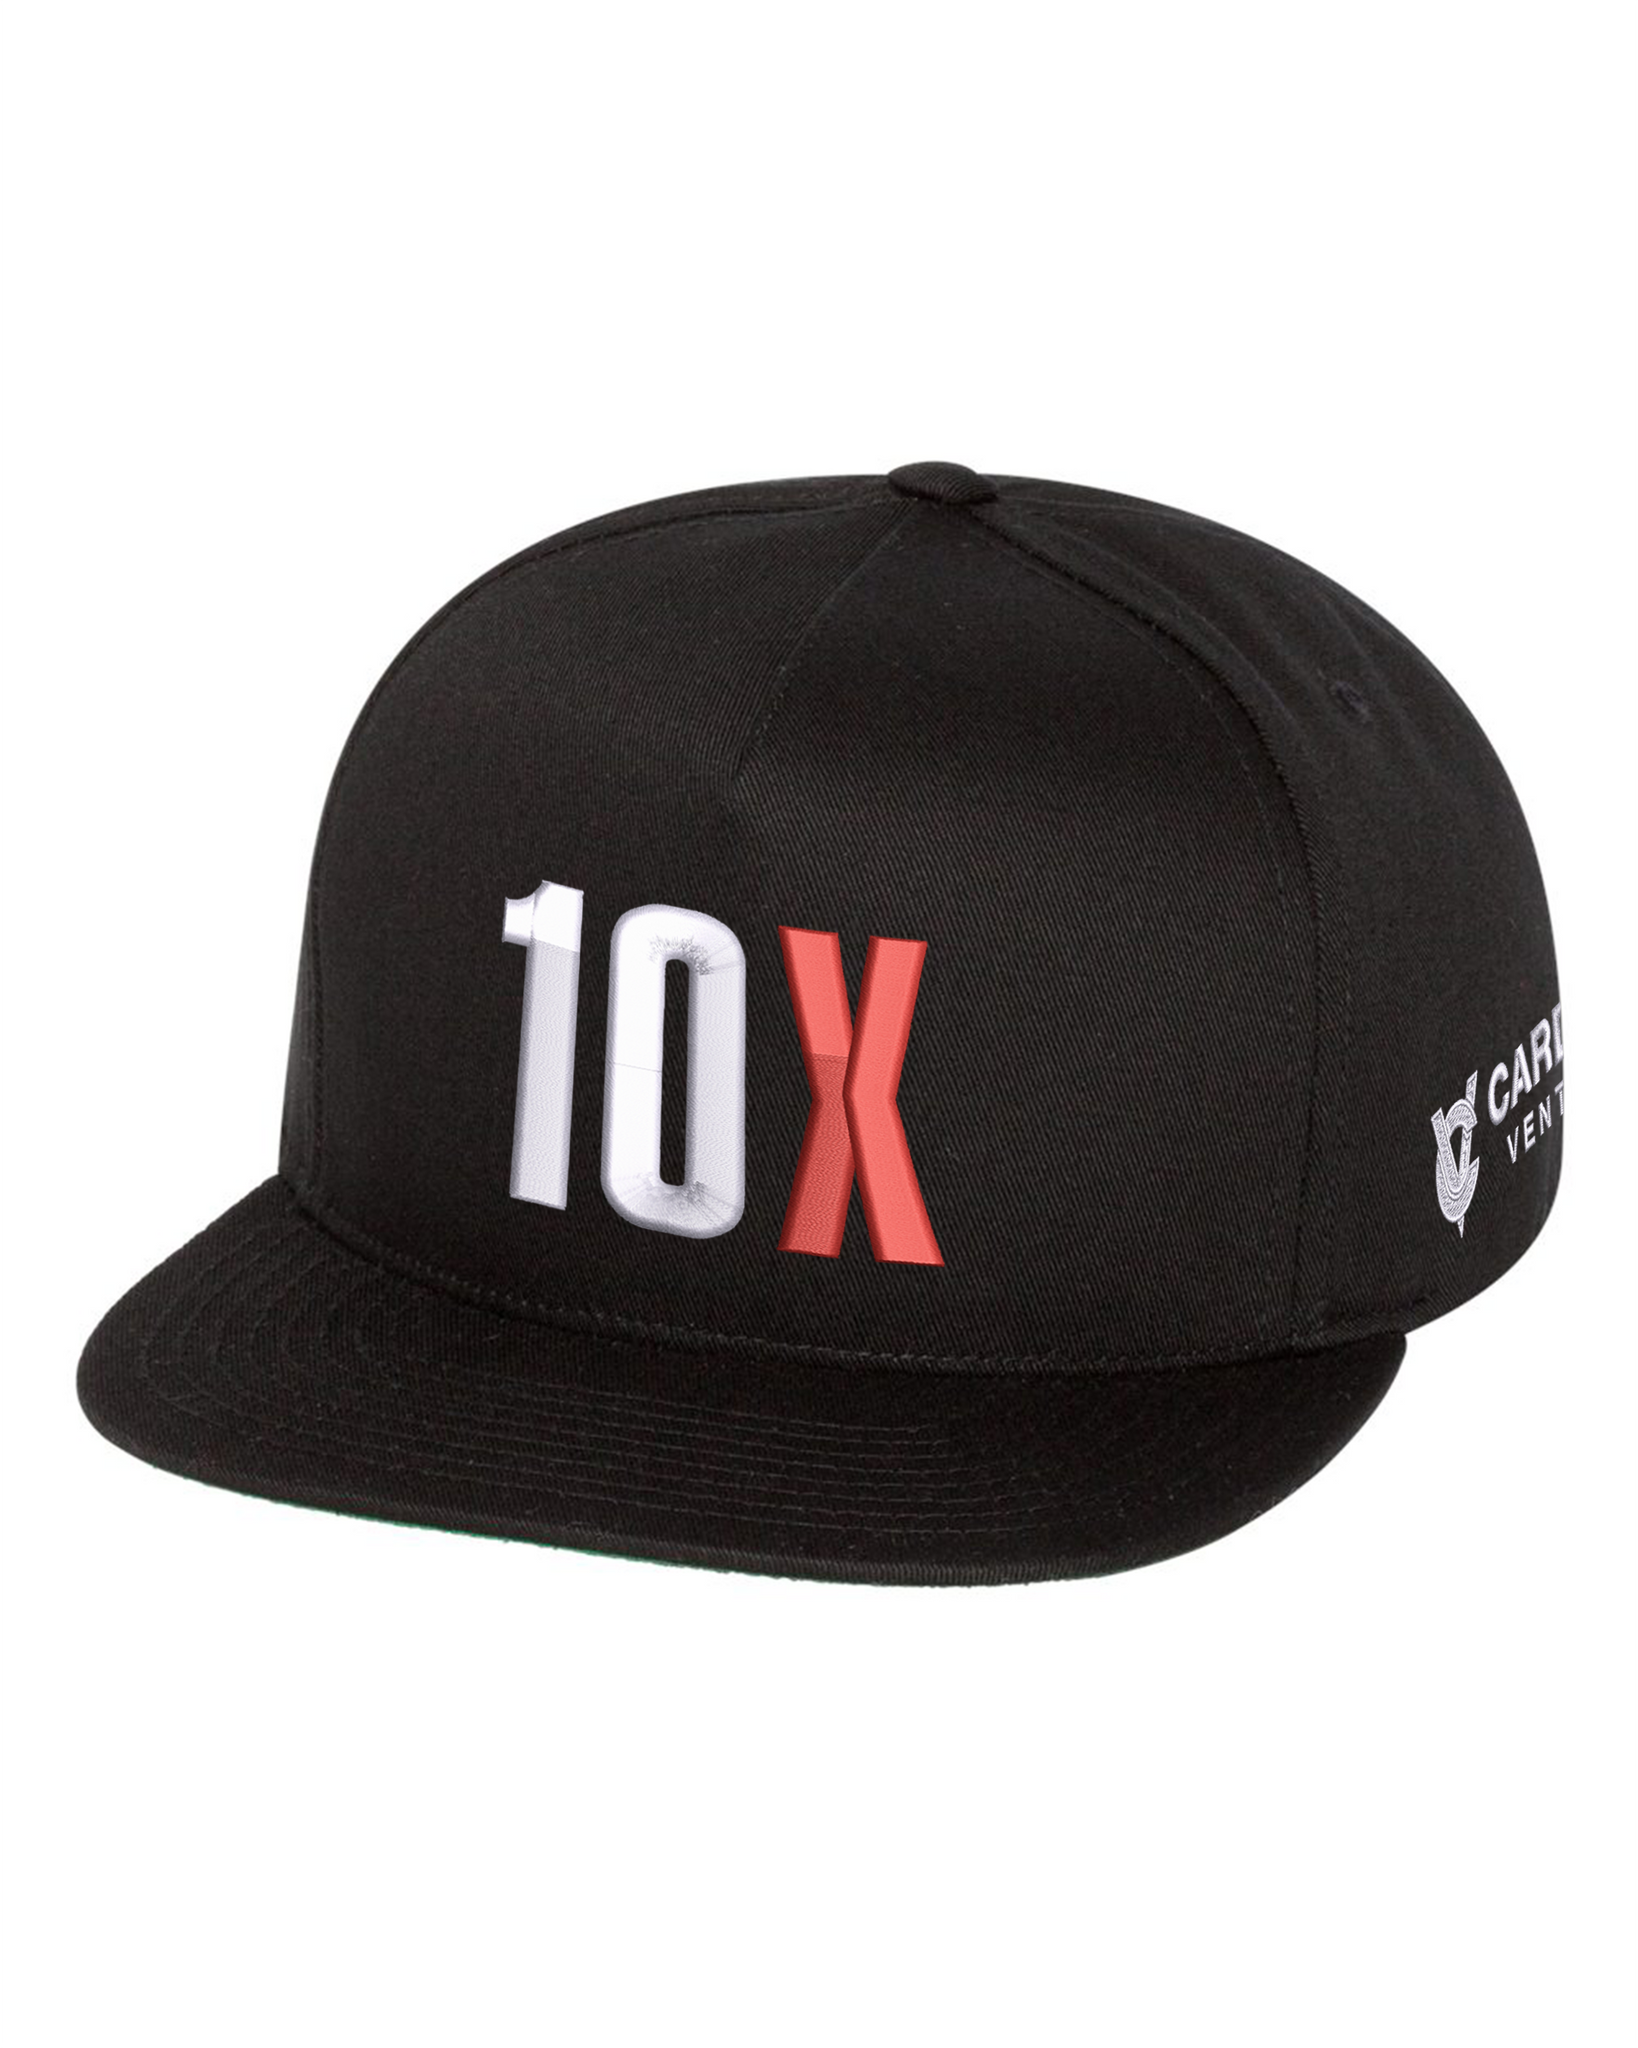 10X Snapback Hat